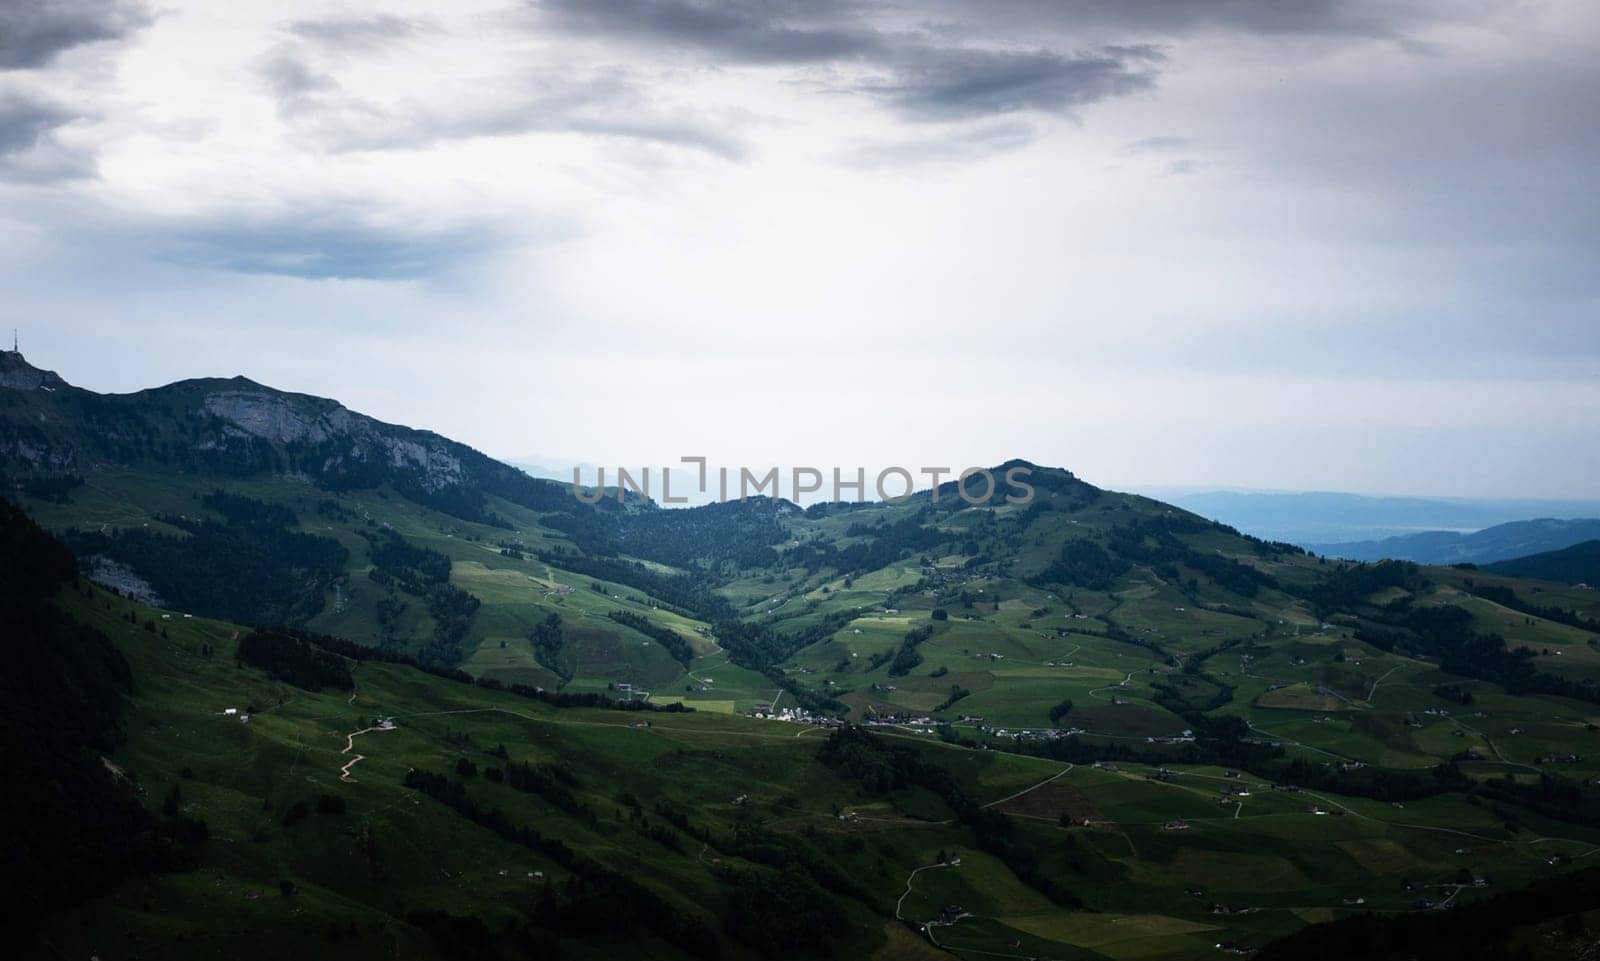 A Beautiful Santis,Switzerland pictures